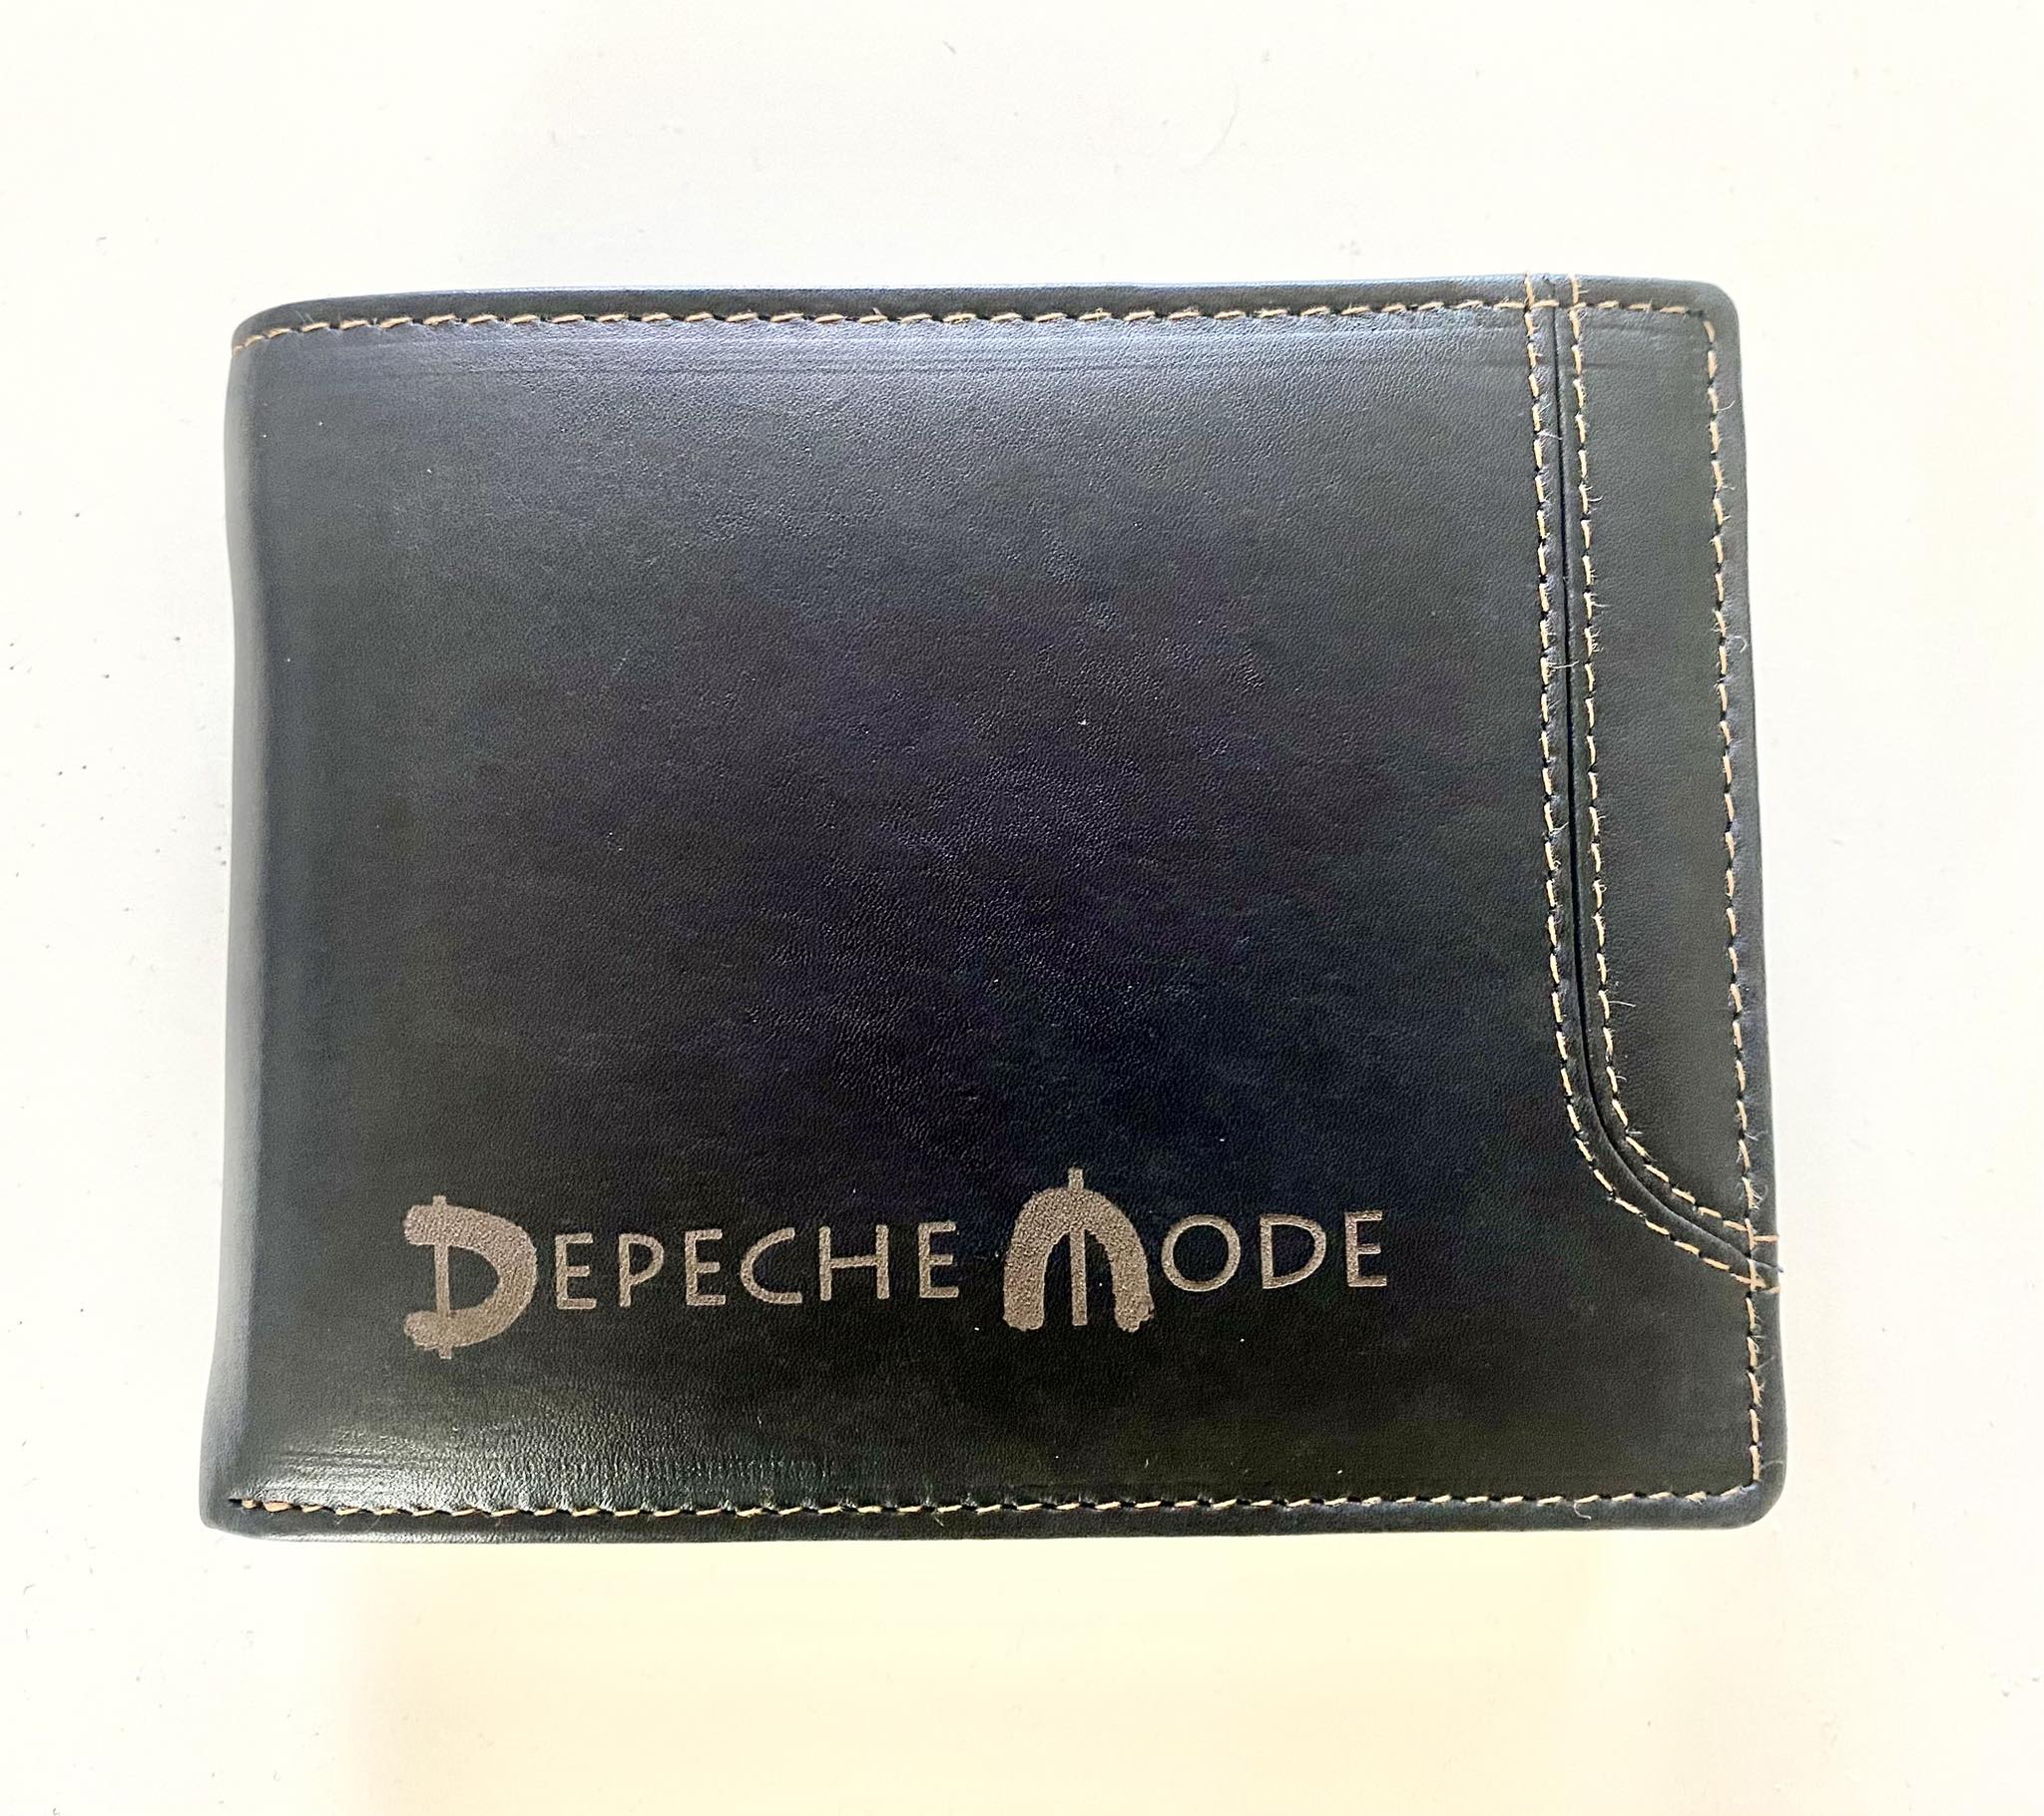 Depeche Mode - Leather Wallet Spirit